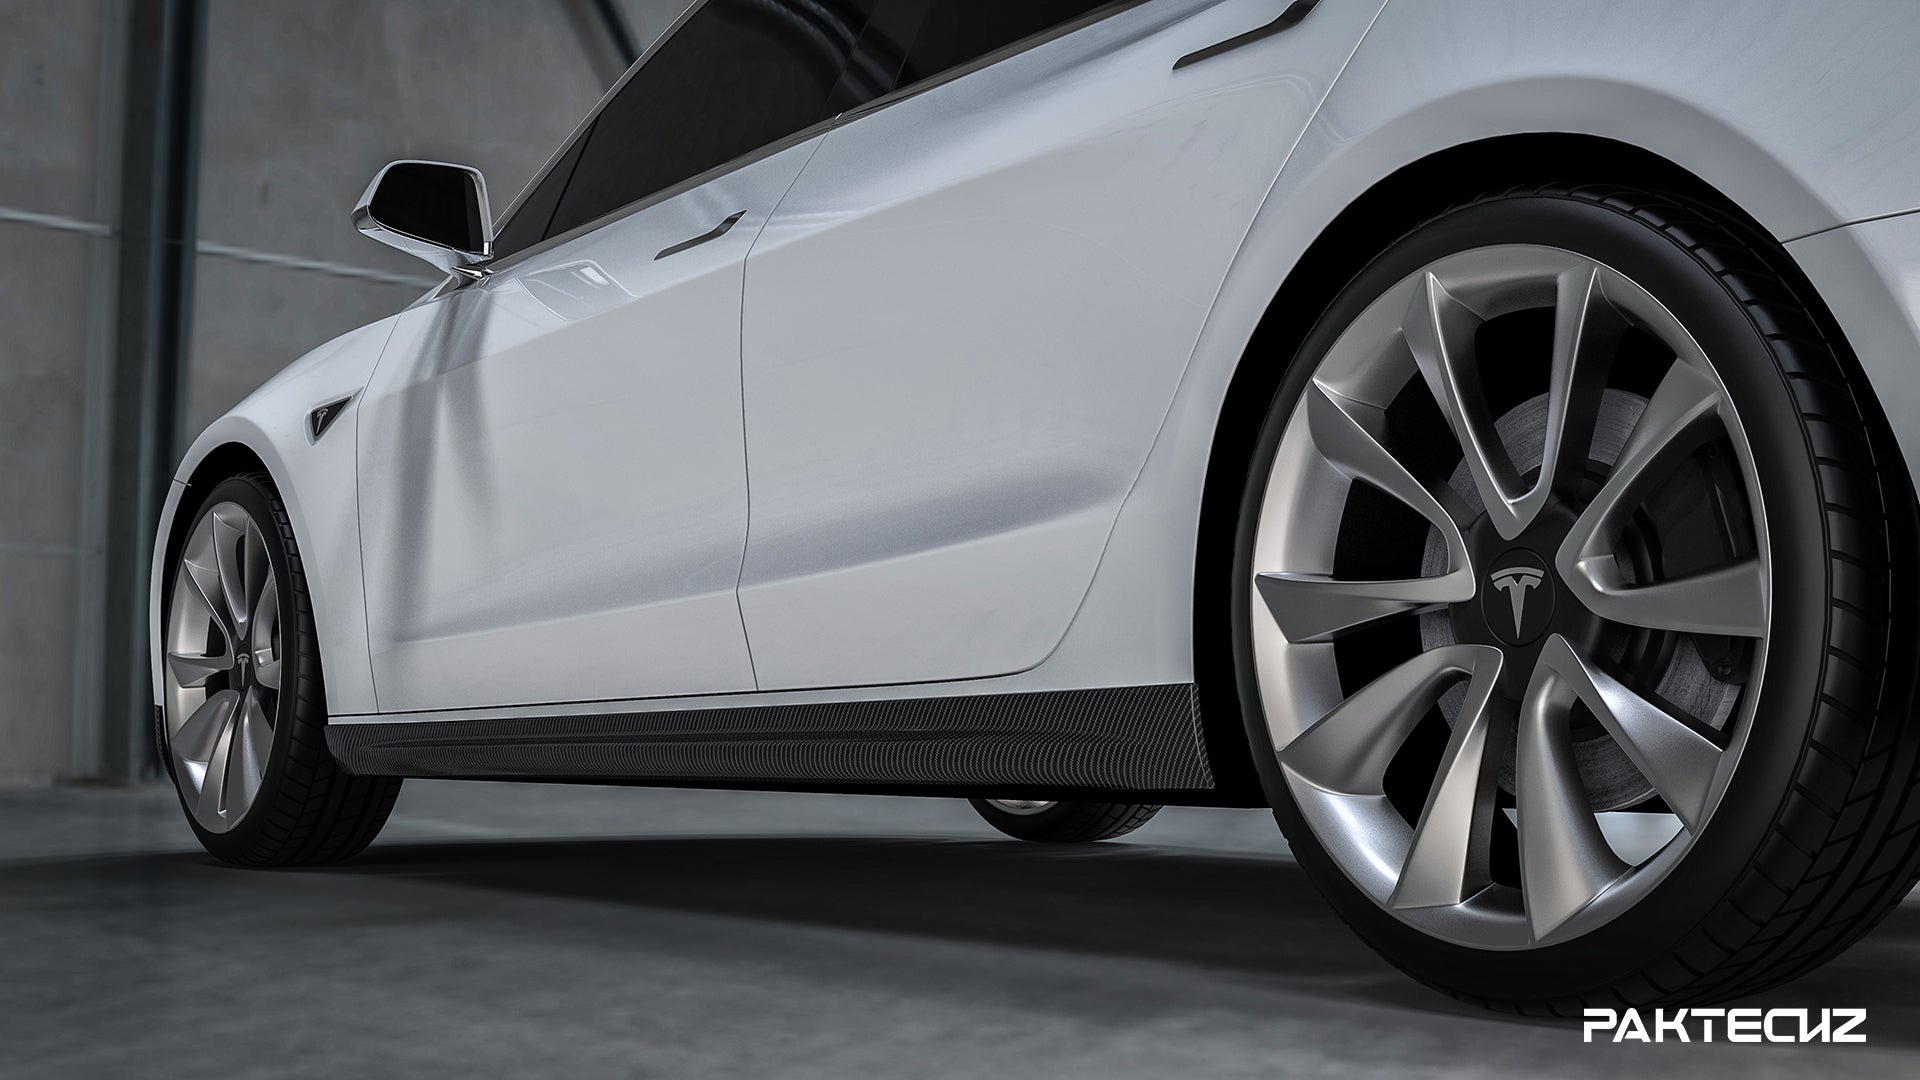 Paktechz Tesla Model 3 Dry Carbon Fiber Side Skirts